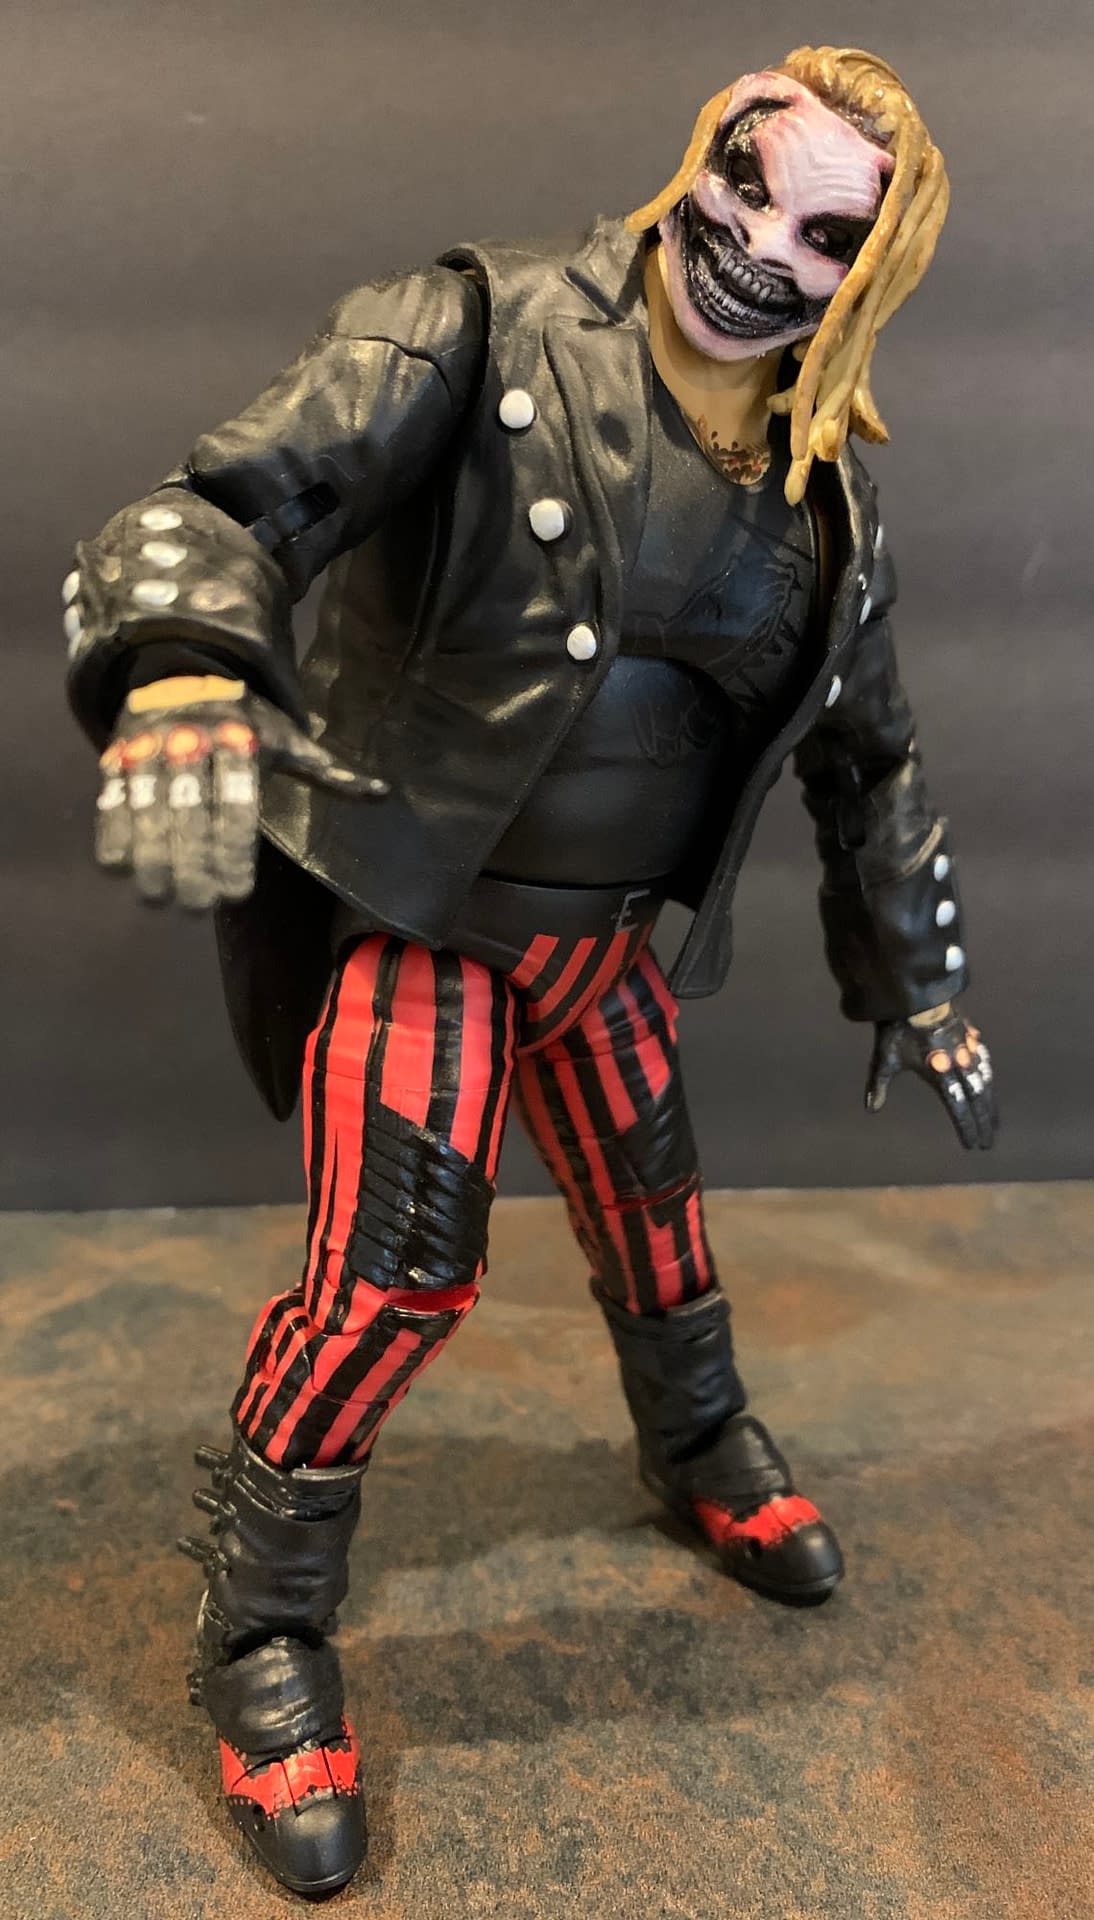 Let's Look At Mattel's Hollywood Hogan & Fiend Ultimate WWE Figures